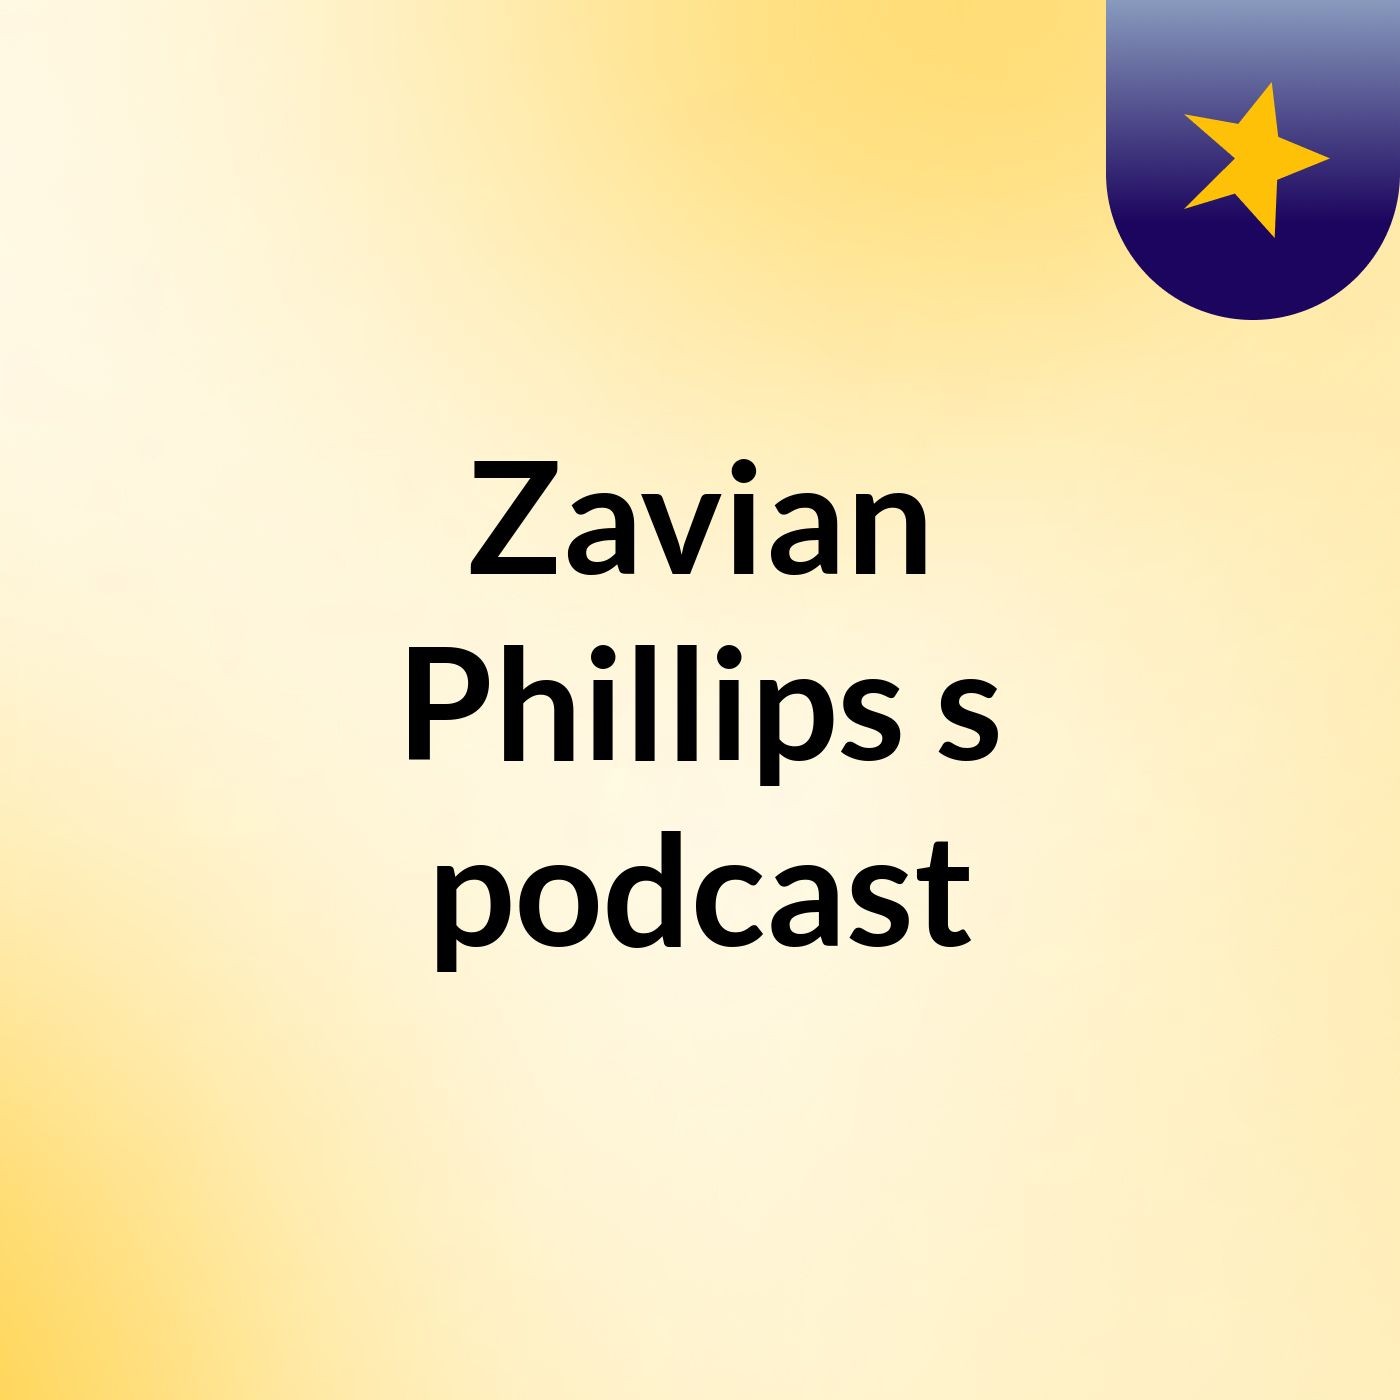 Zavian Phillips's podcast